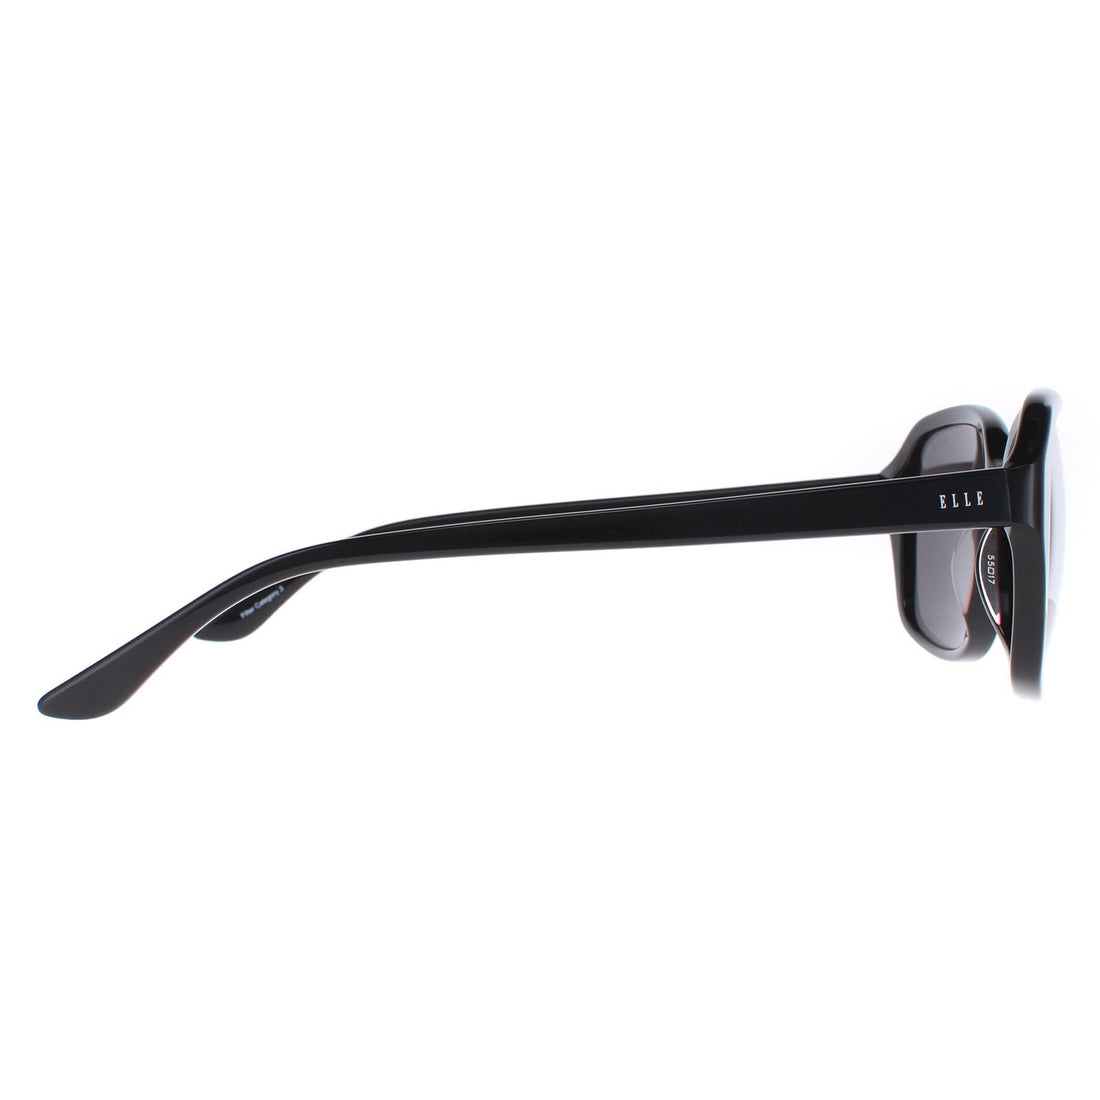 Elle Sunglasses 14905 BK Black Grey